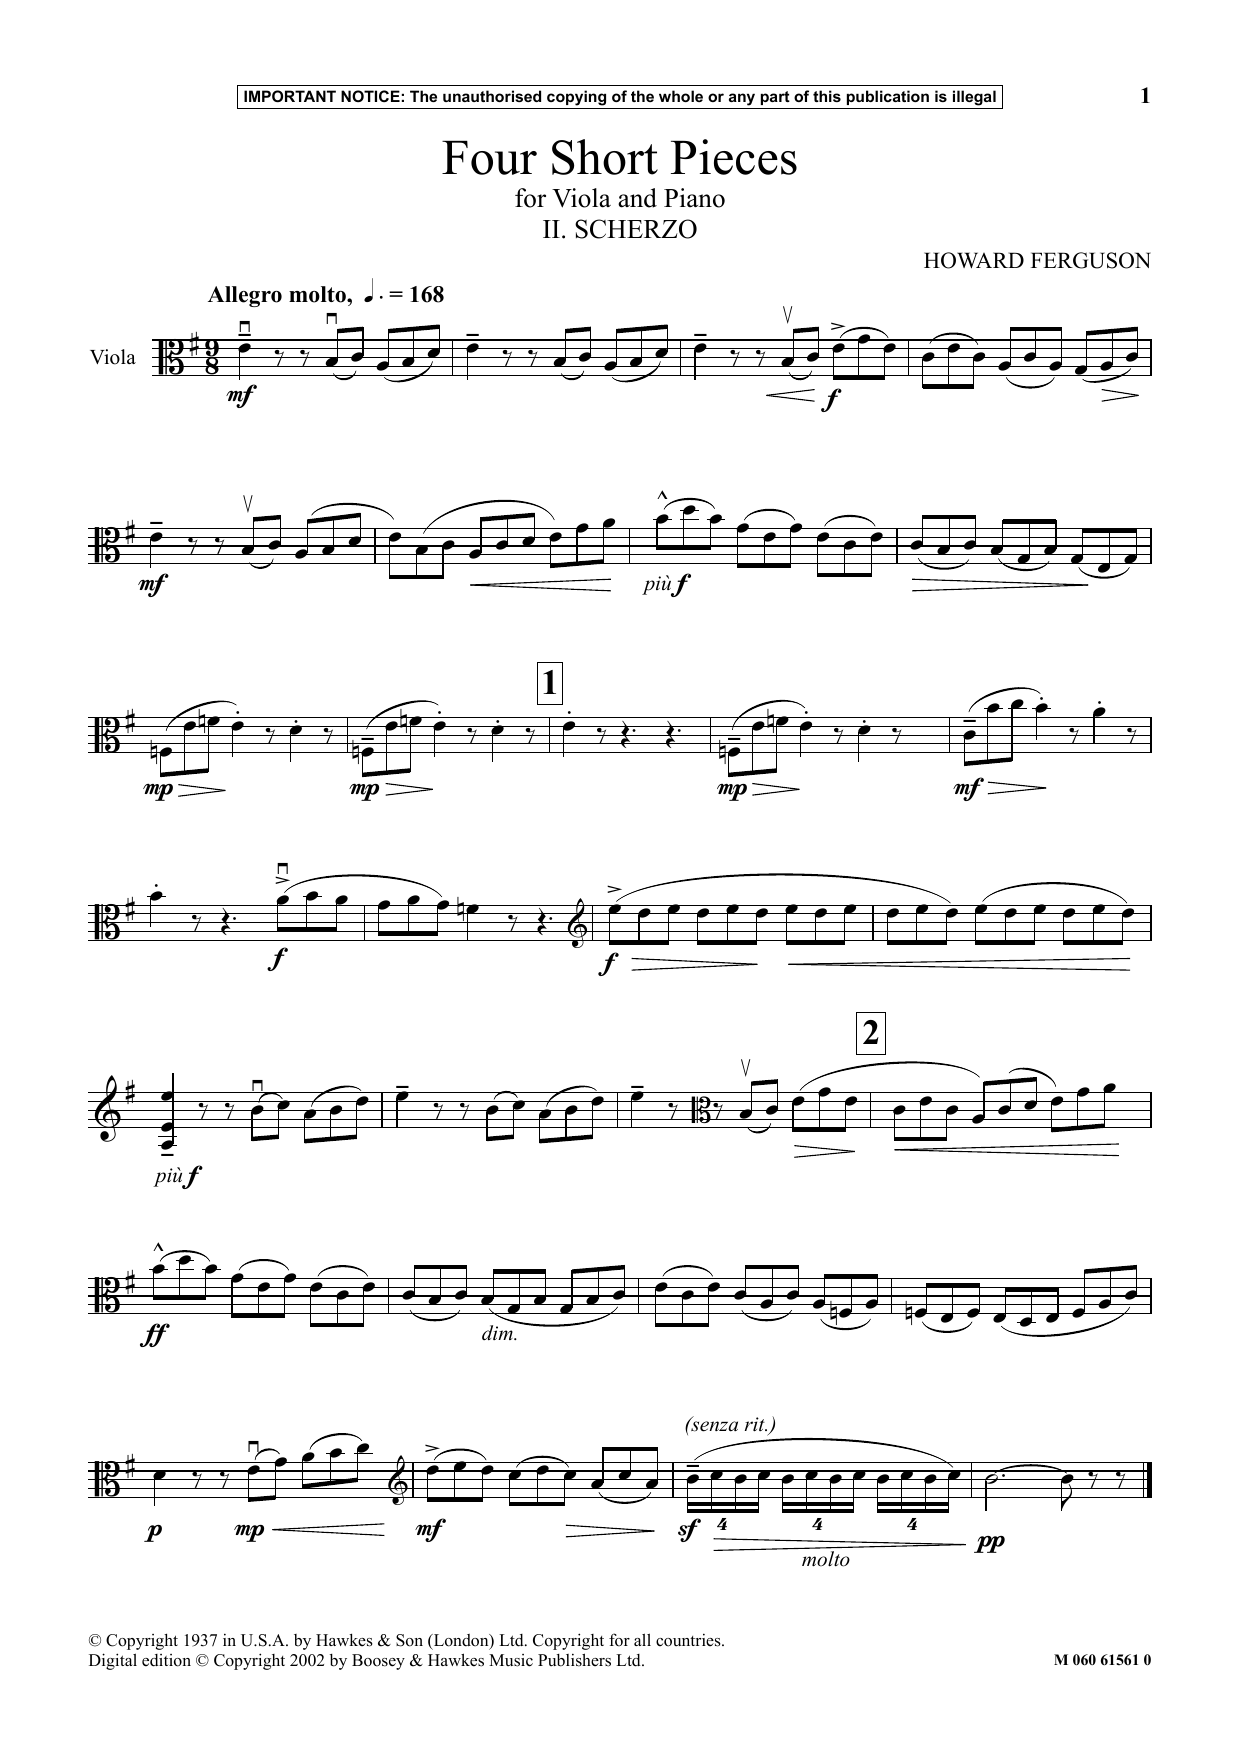 Download Howard Ferguson II. Scherzo (from Four Short Pieces For Sheet Music